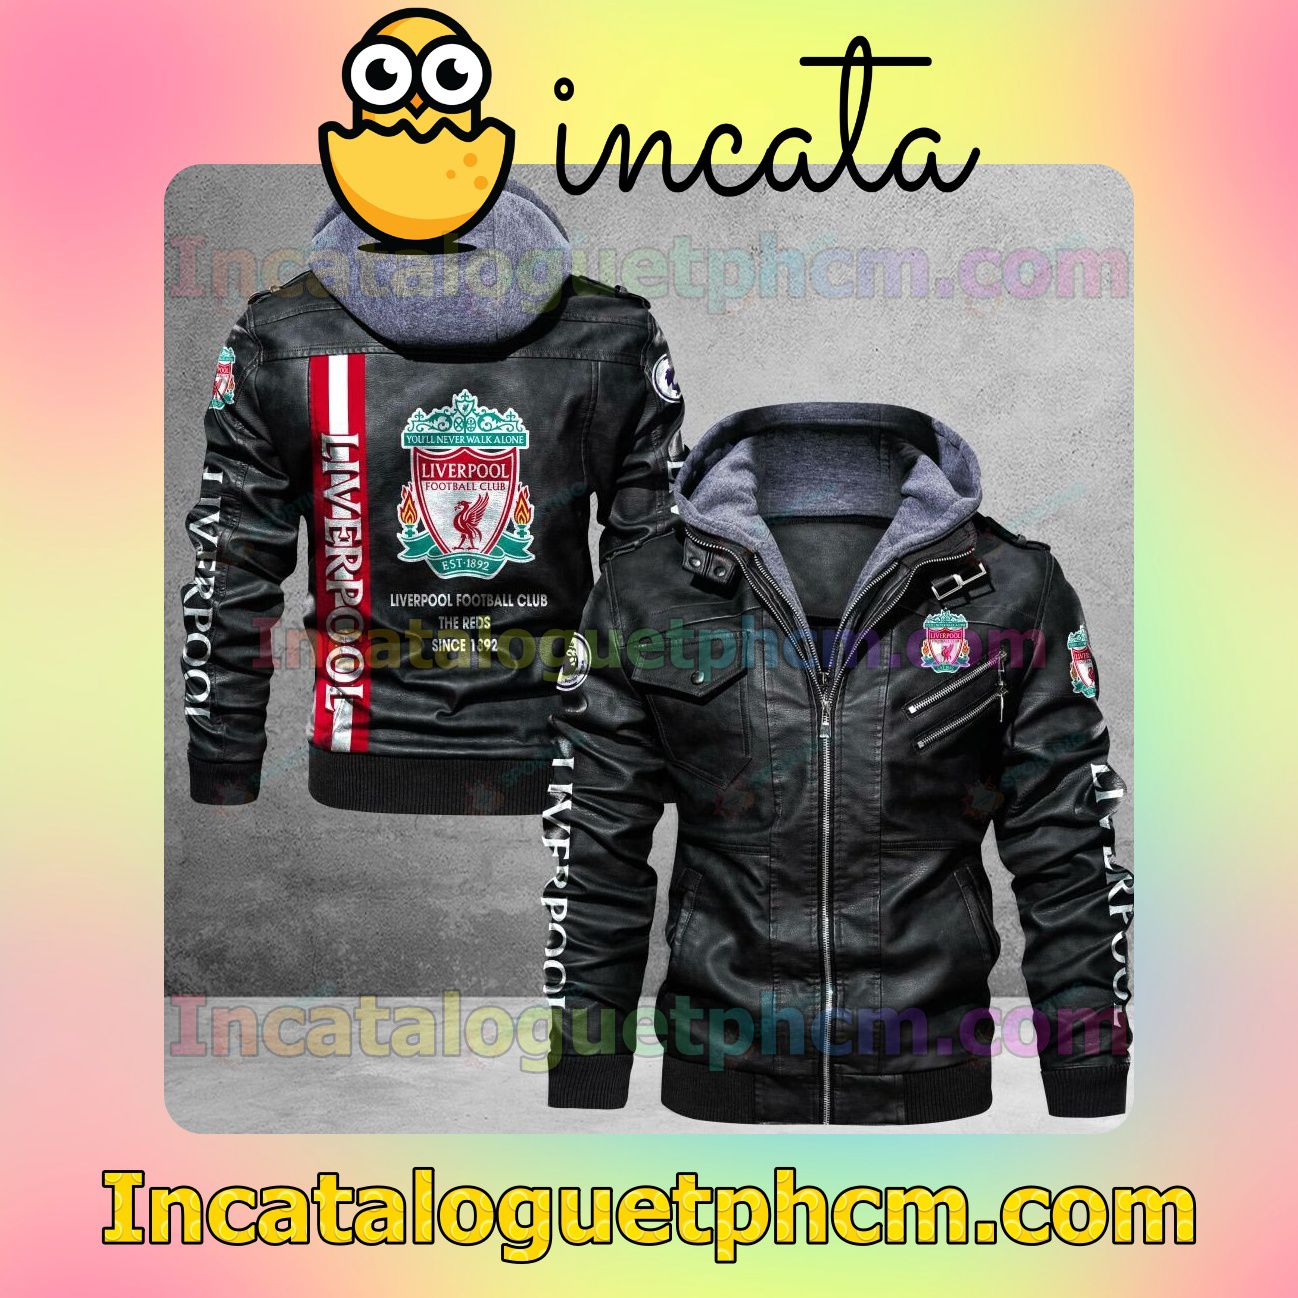 Liverpool F.C Brand Uniform Leather Jacket